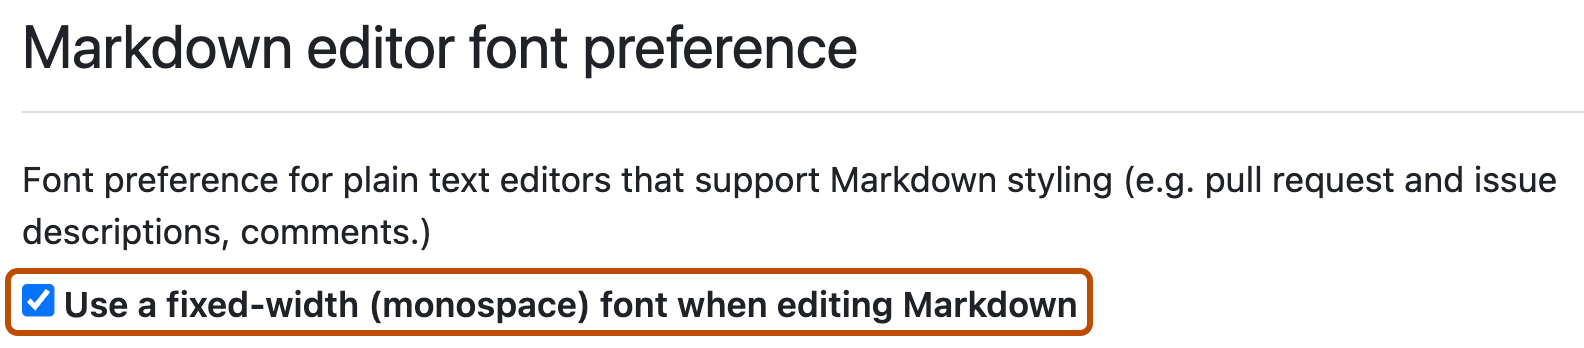 GitHub 用户设置中 Markdown 首选项的屏幕截图。 选中了在 Markdown 中使用定宽字体的复选框，并用深橙色框出。